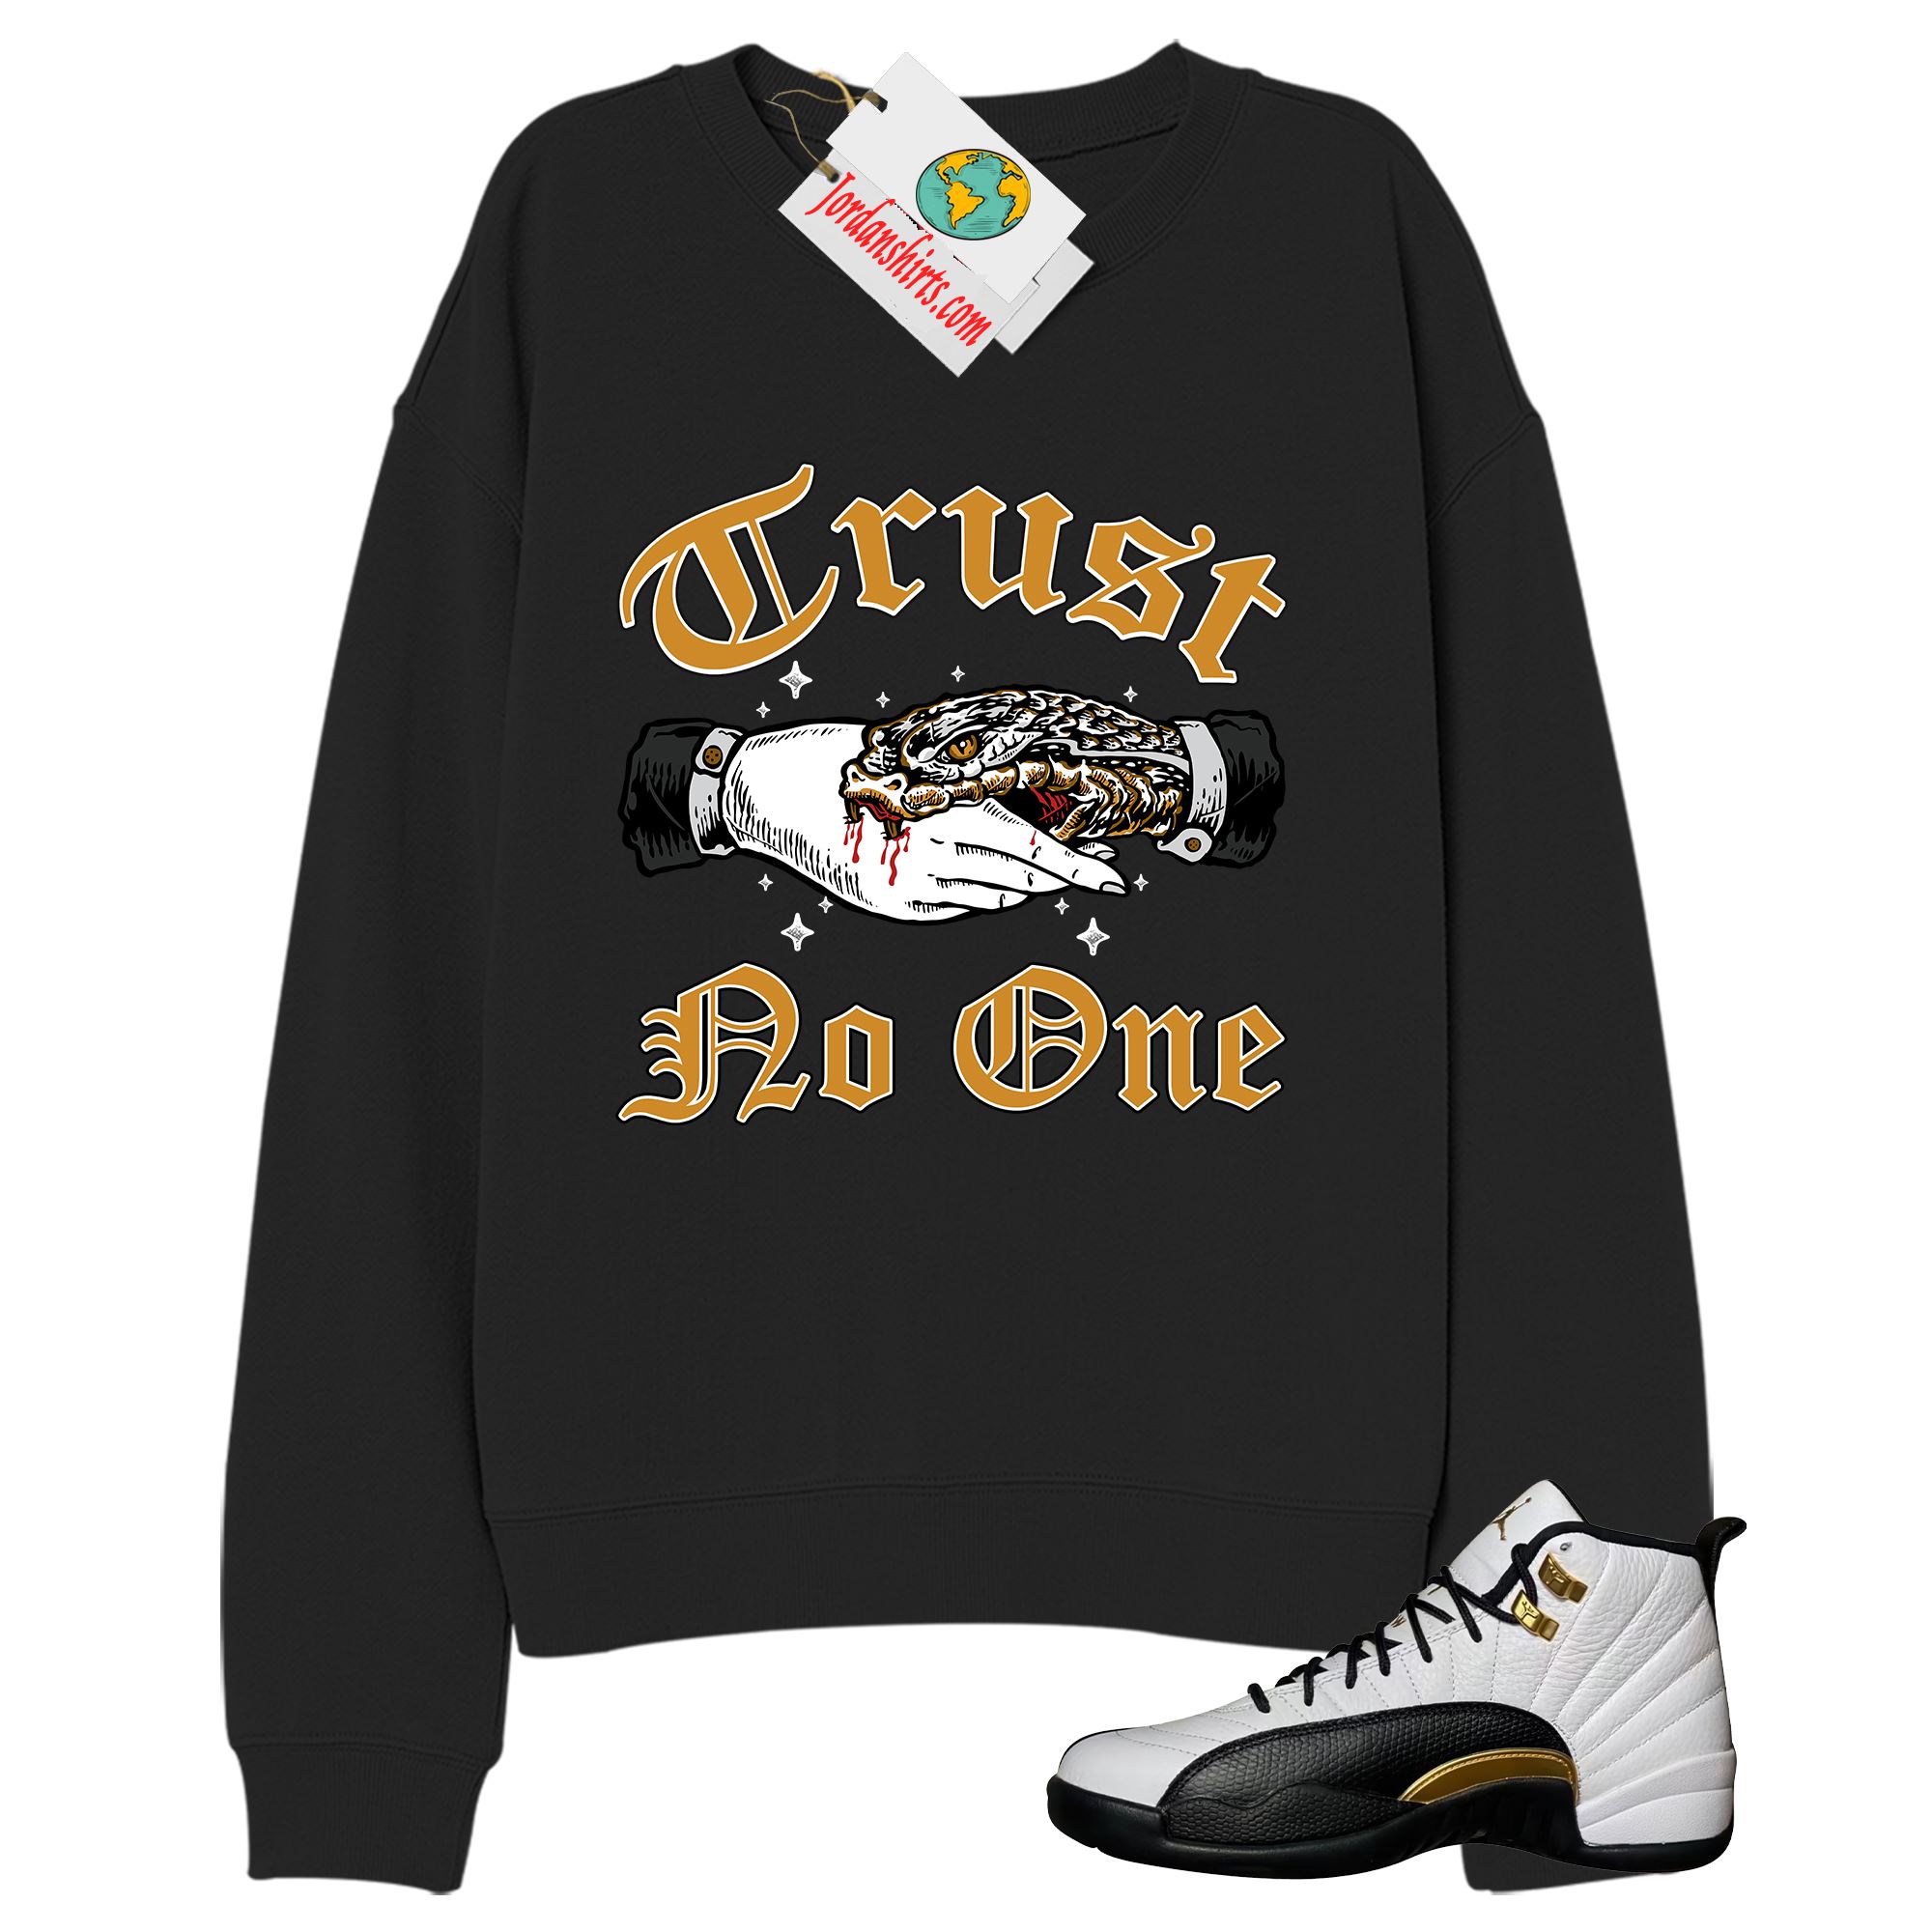 Jordan 12 Sweatshirt, Trust No One Deal With Snake Black Sweatshirt Air Jordan 12 Royalty 12s Size Up To 5xl